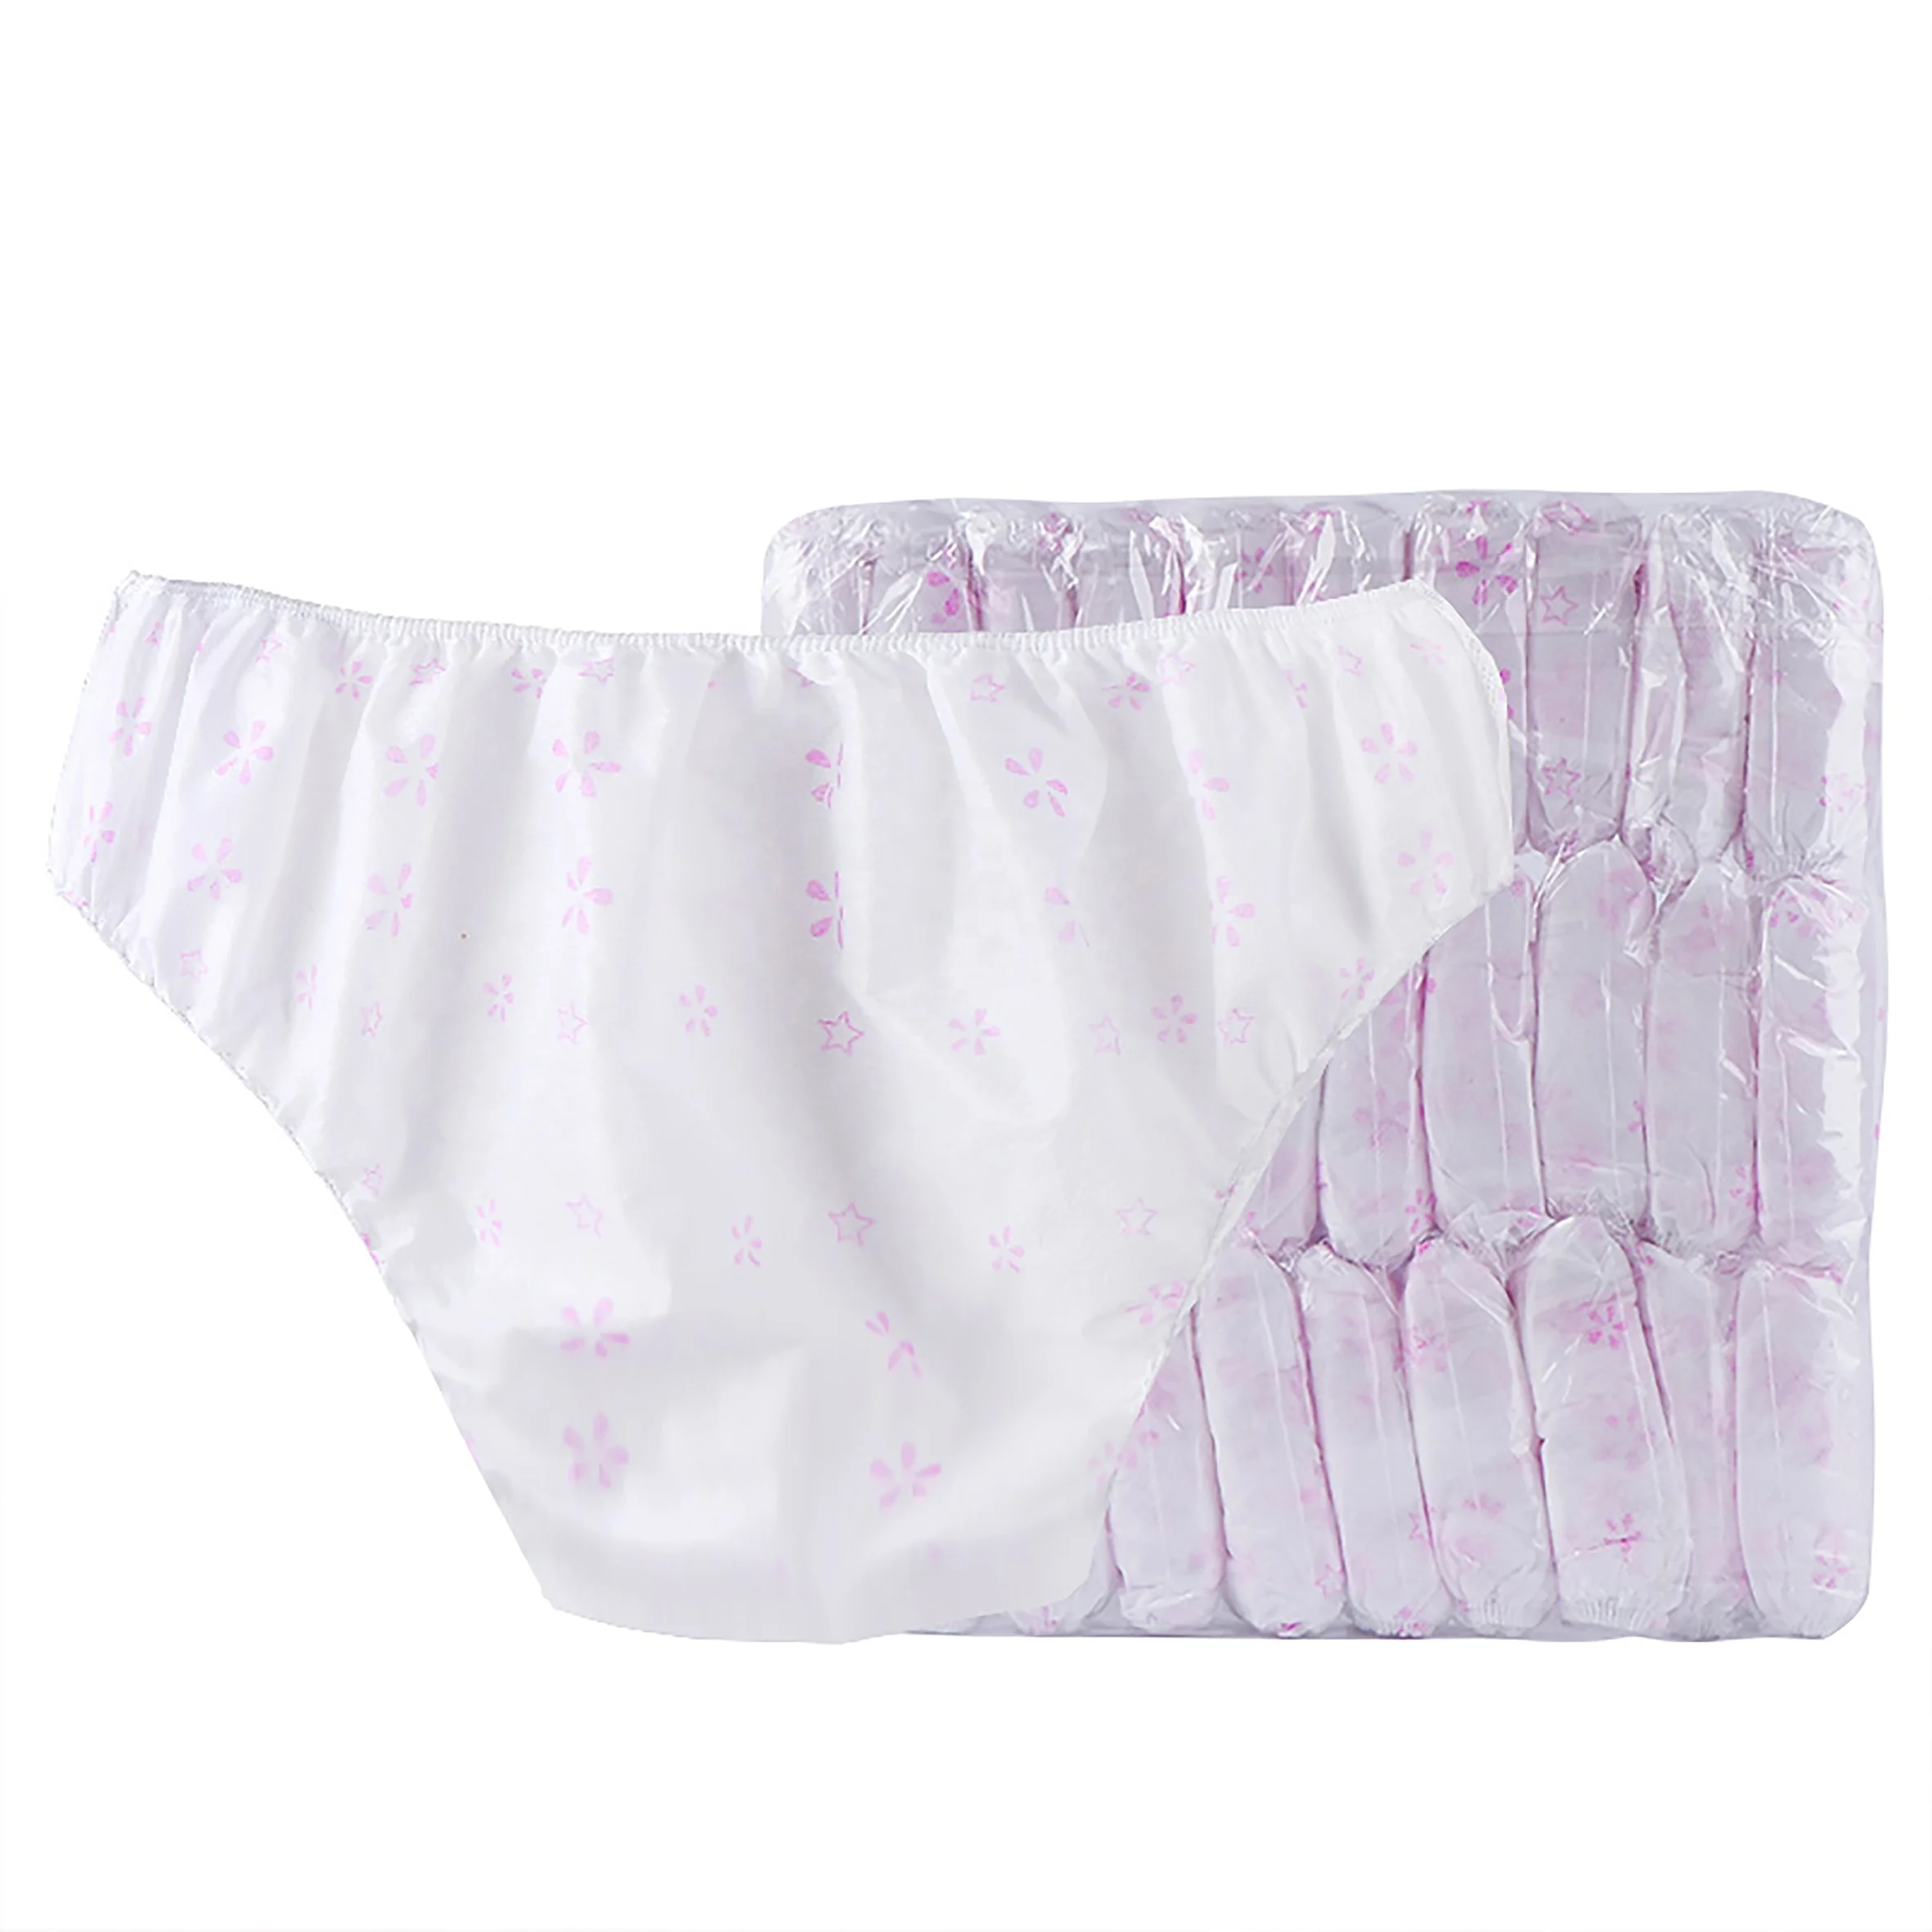 Unisex Breathable SPA Massage Hospital Panty Maternity Cotton